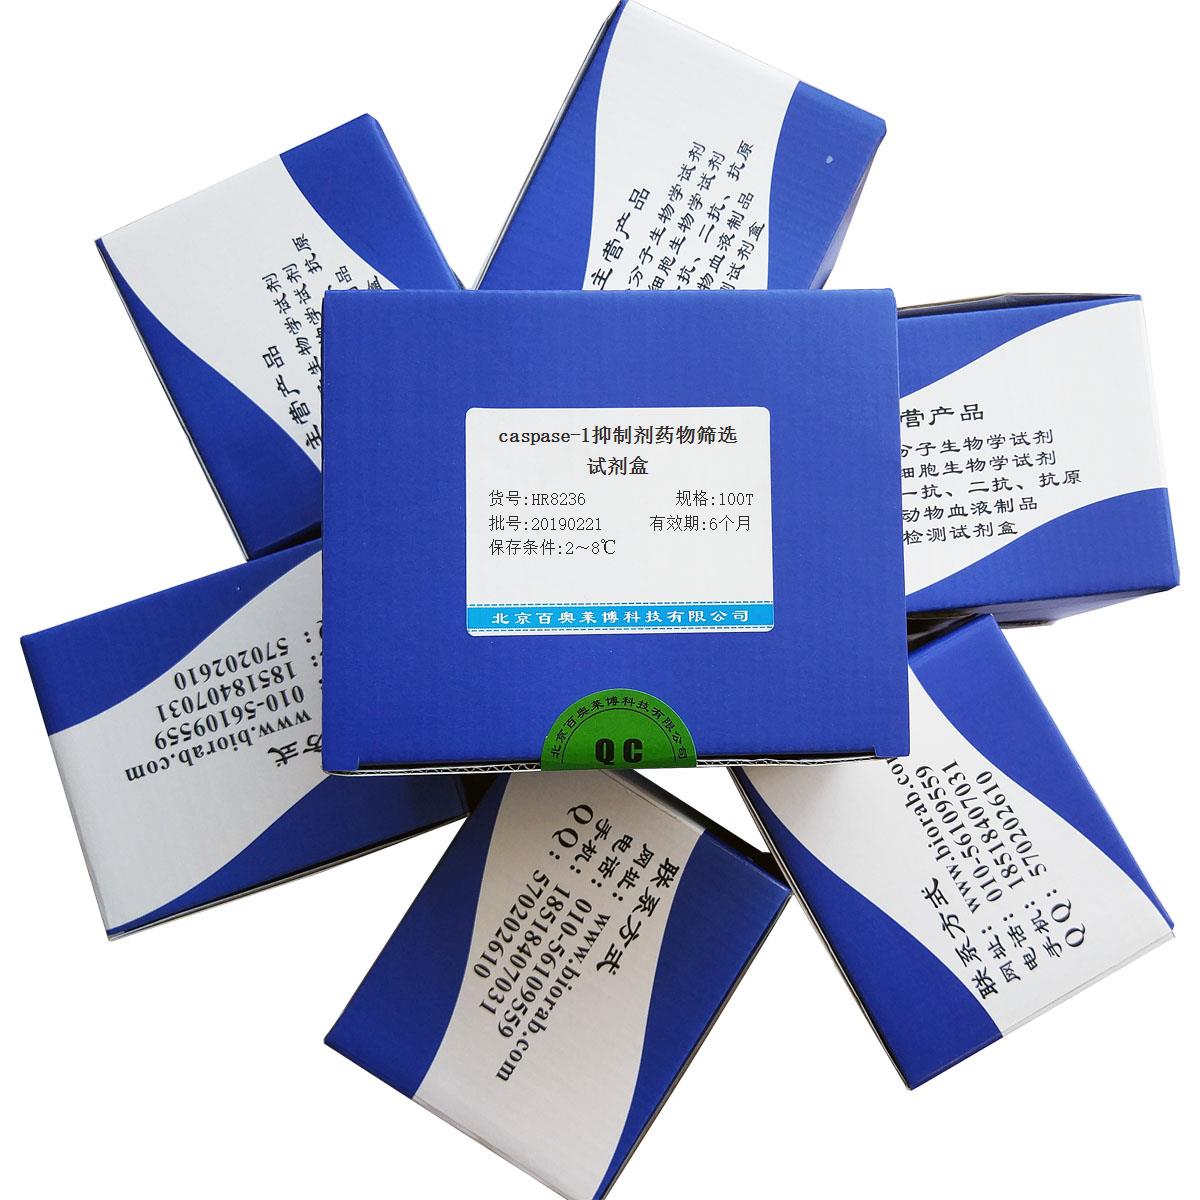 caspase-1抑制剂药物筛选试剂盒